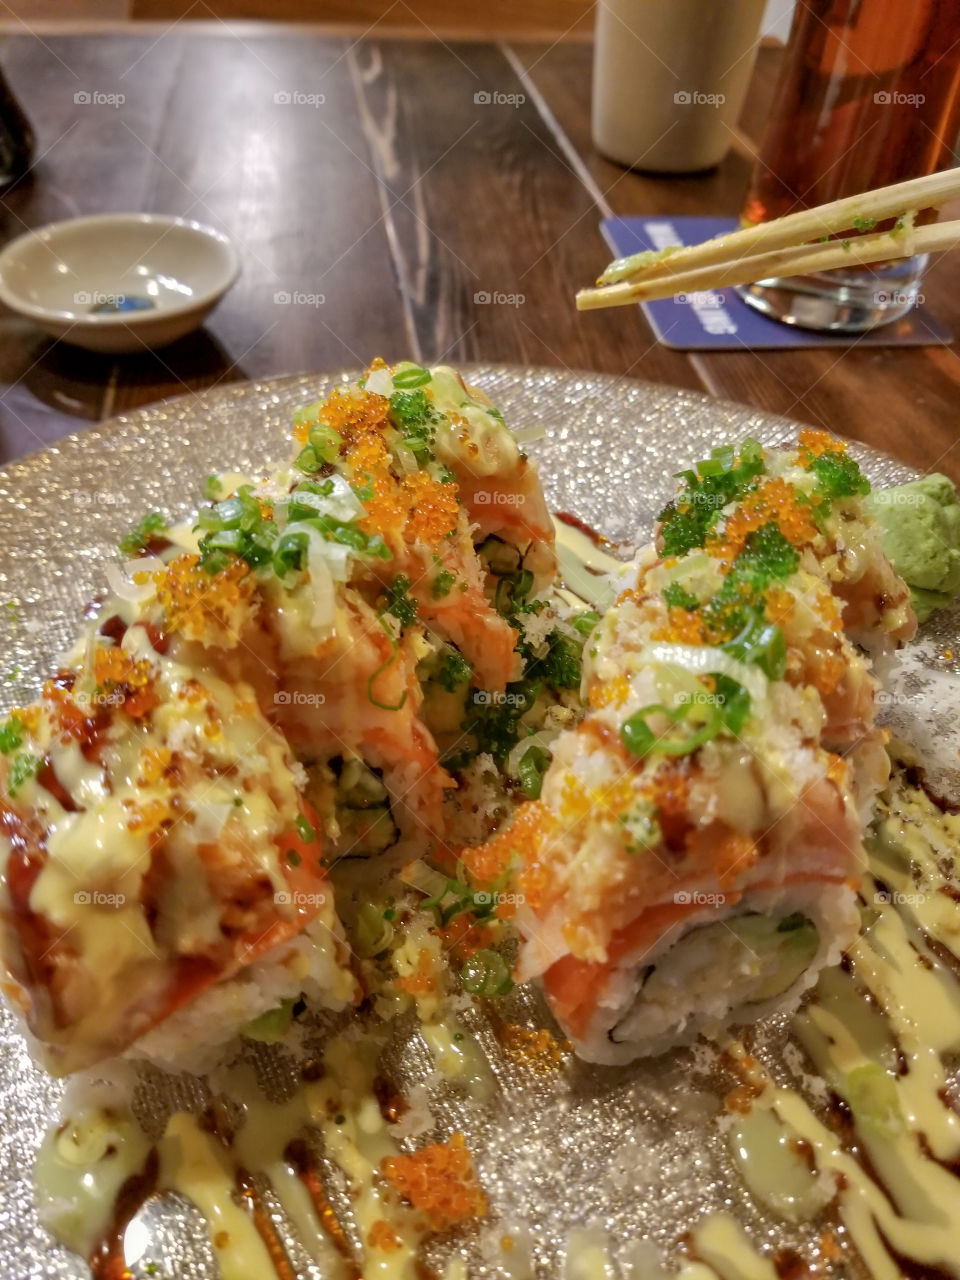 Delicious sushi!